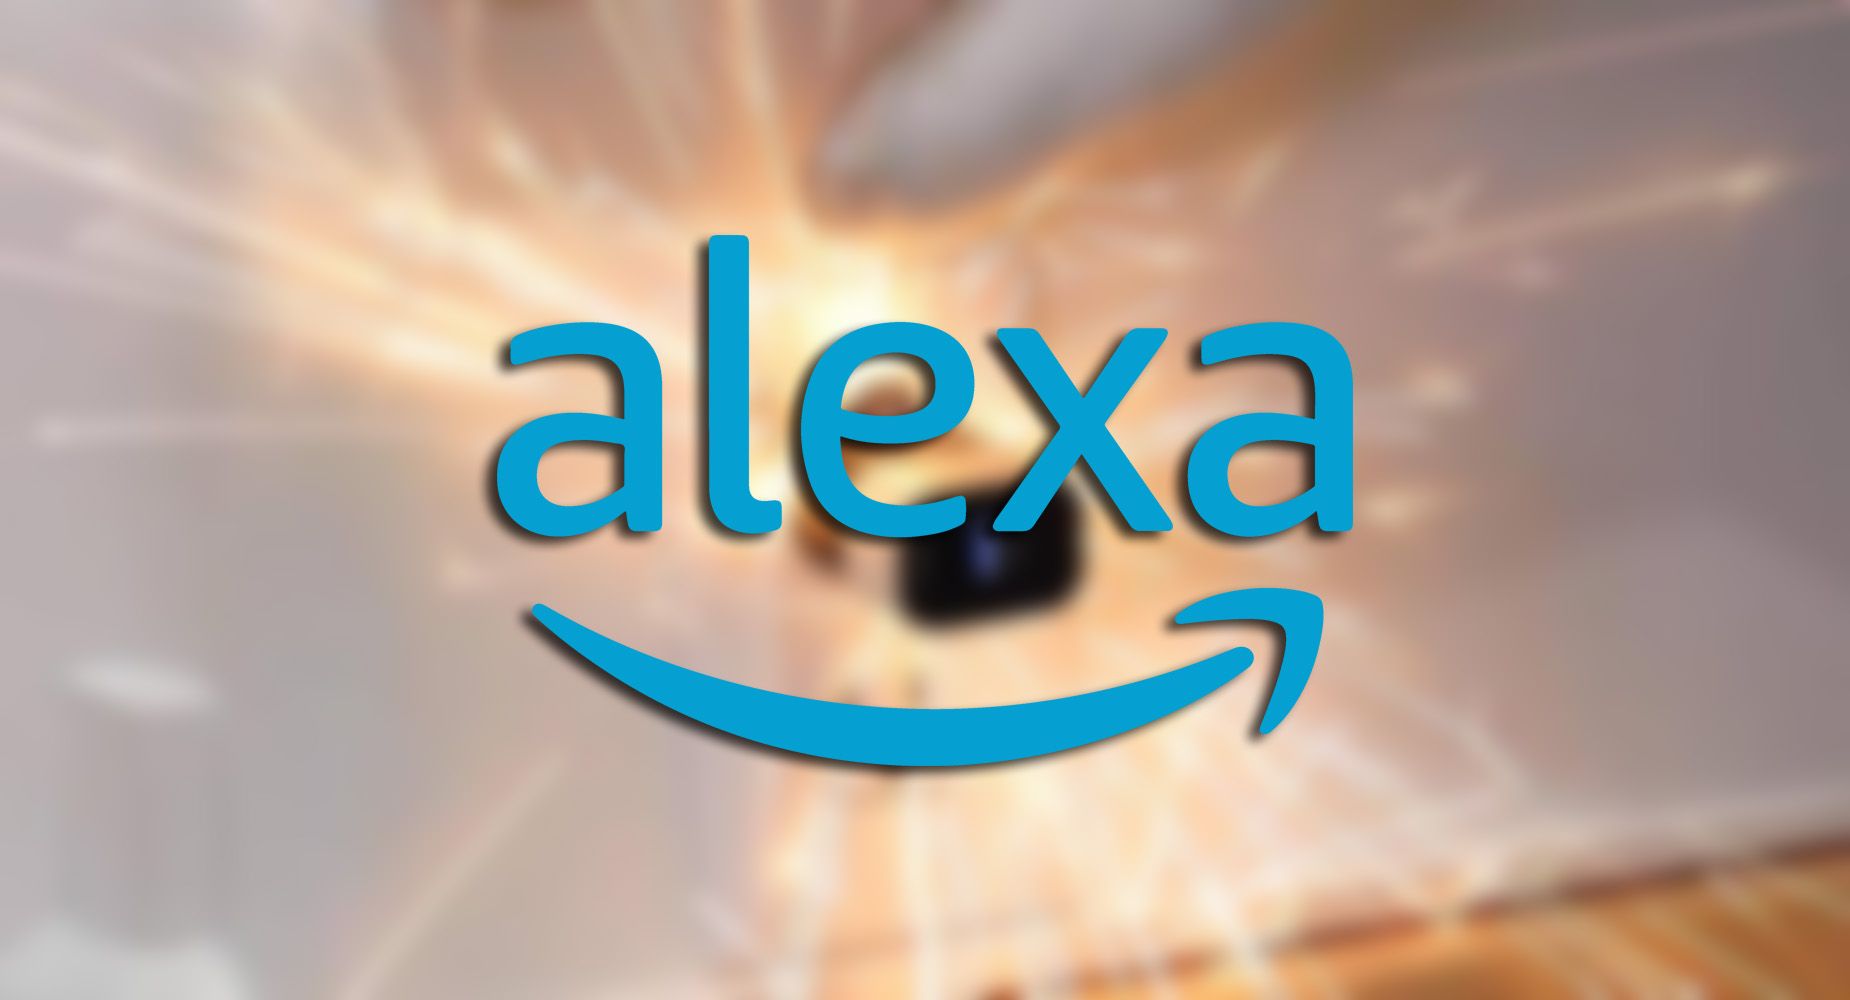 O logotipo da Amazon Alexa contra uma imagem desfocada.